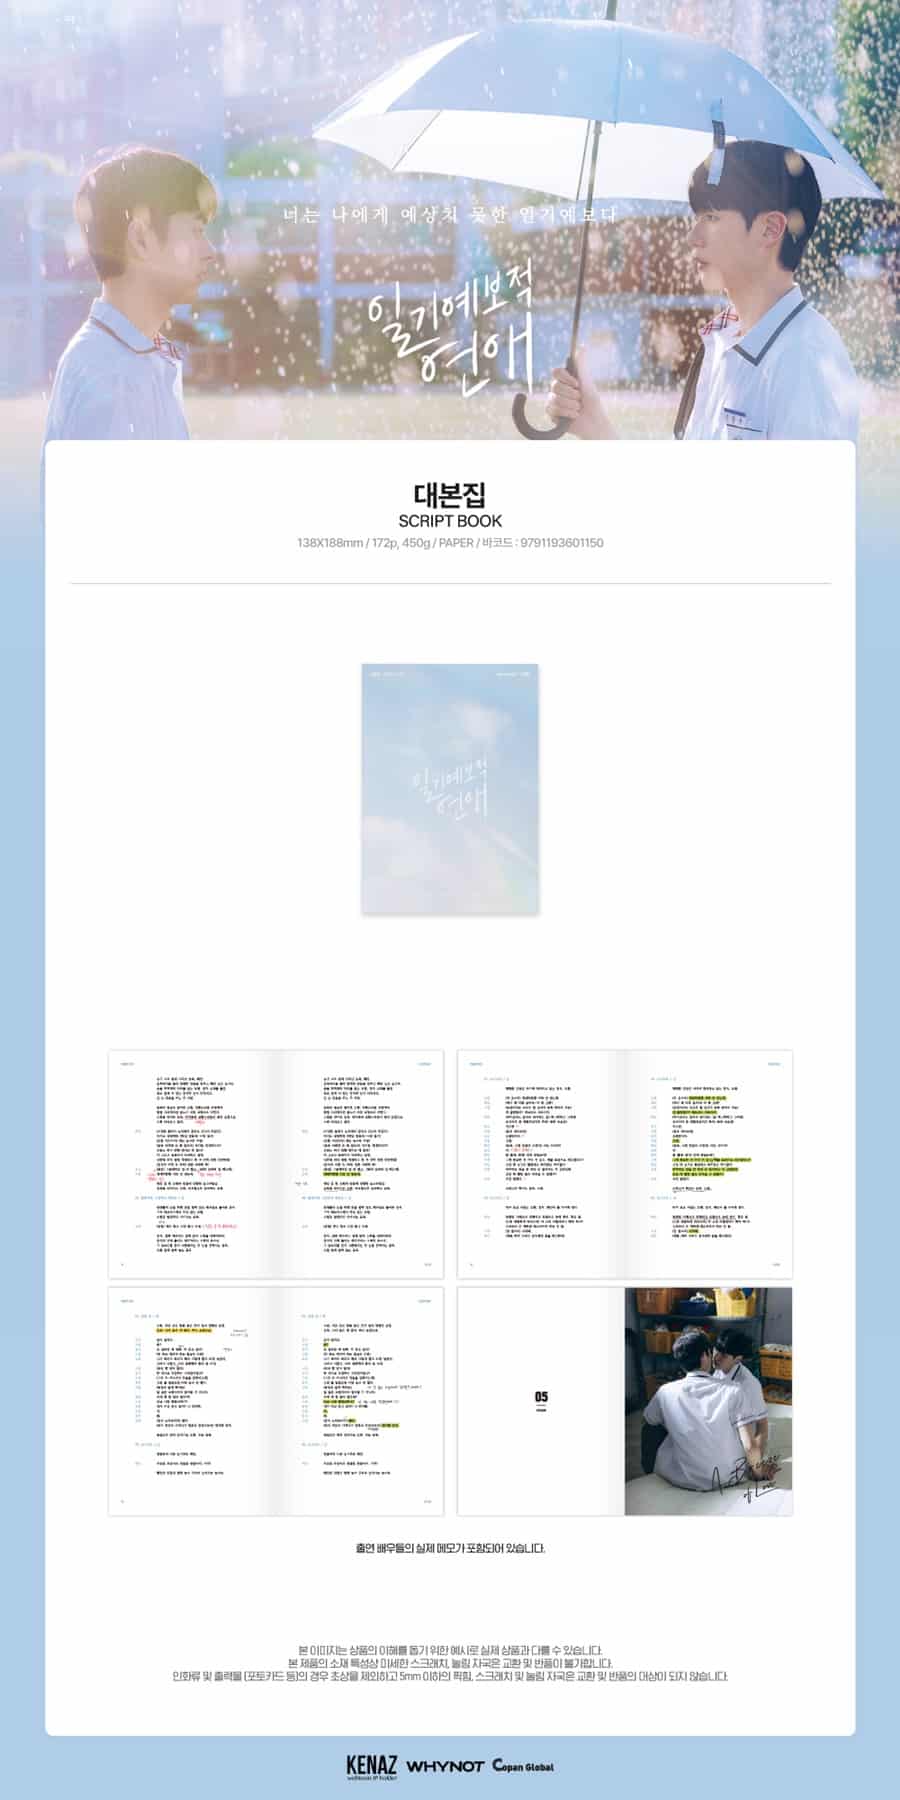 a-breeze-of-love-01-script-book-official-md-wholesales